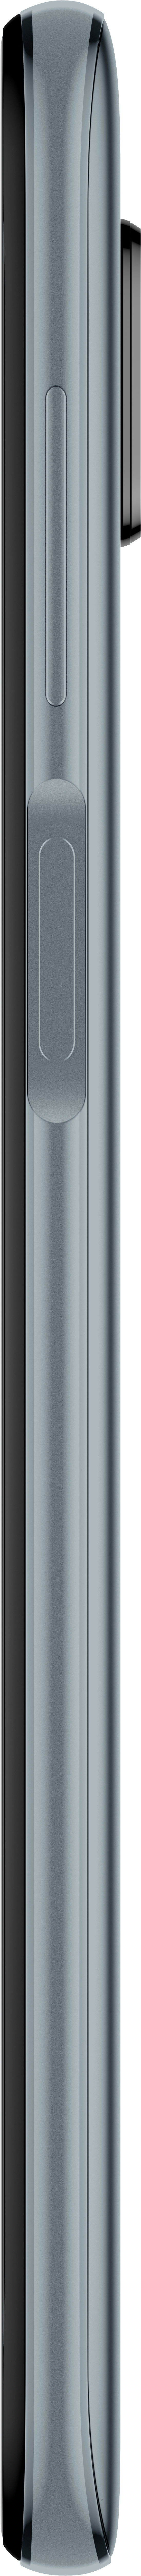 SIM 128 Pro Grey Interstellar XIAOMI GB Redmi Note 9 Dual